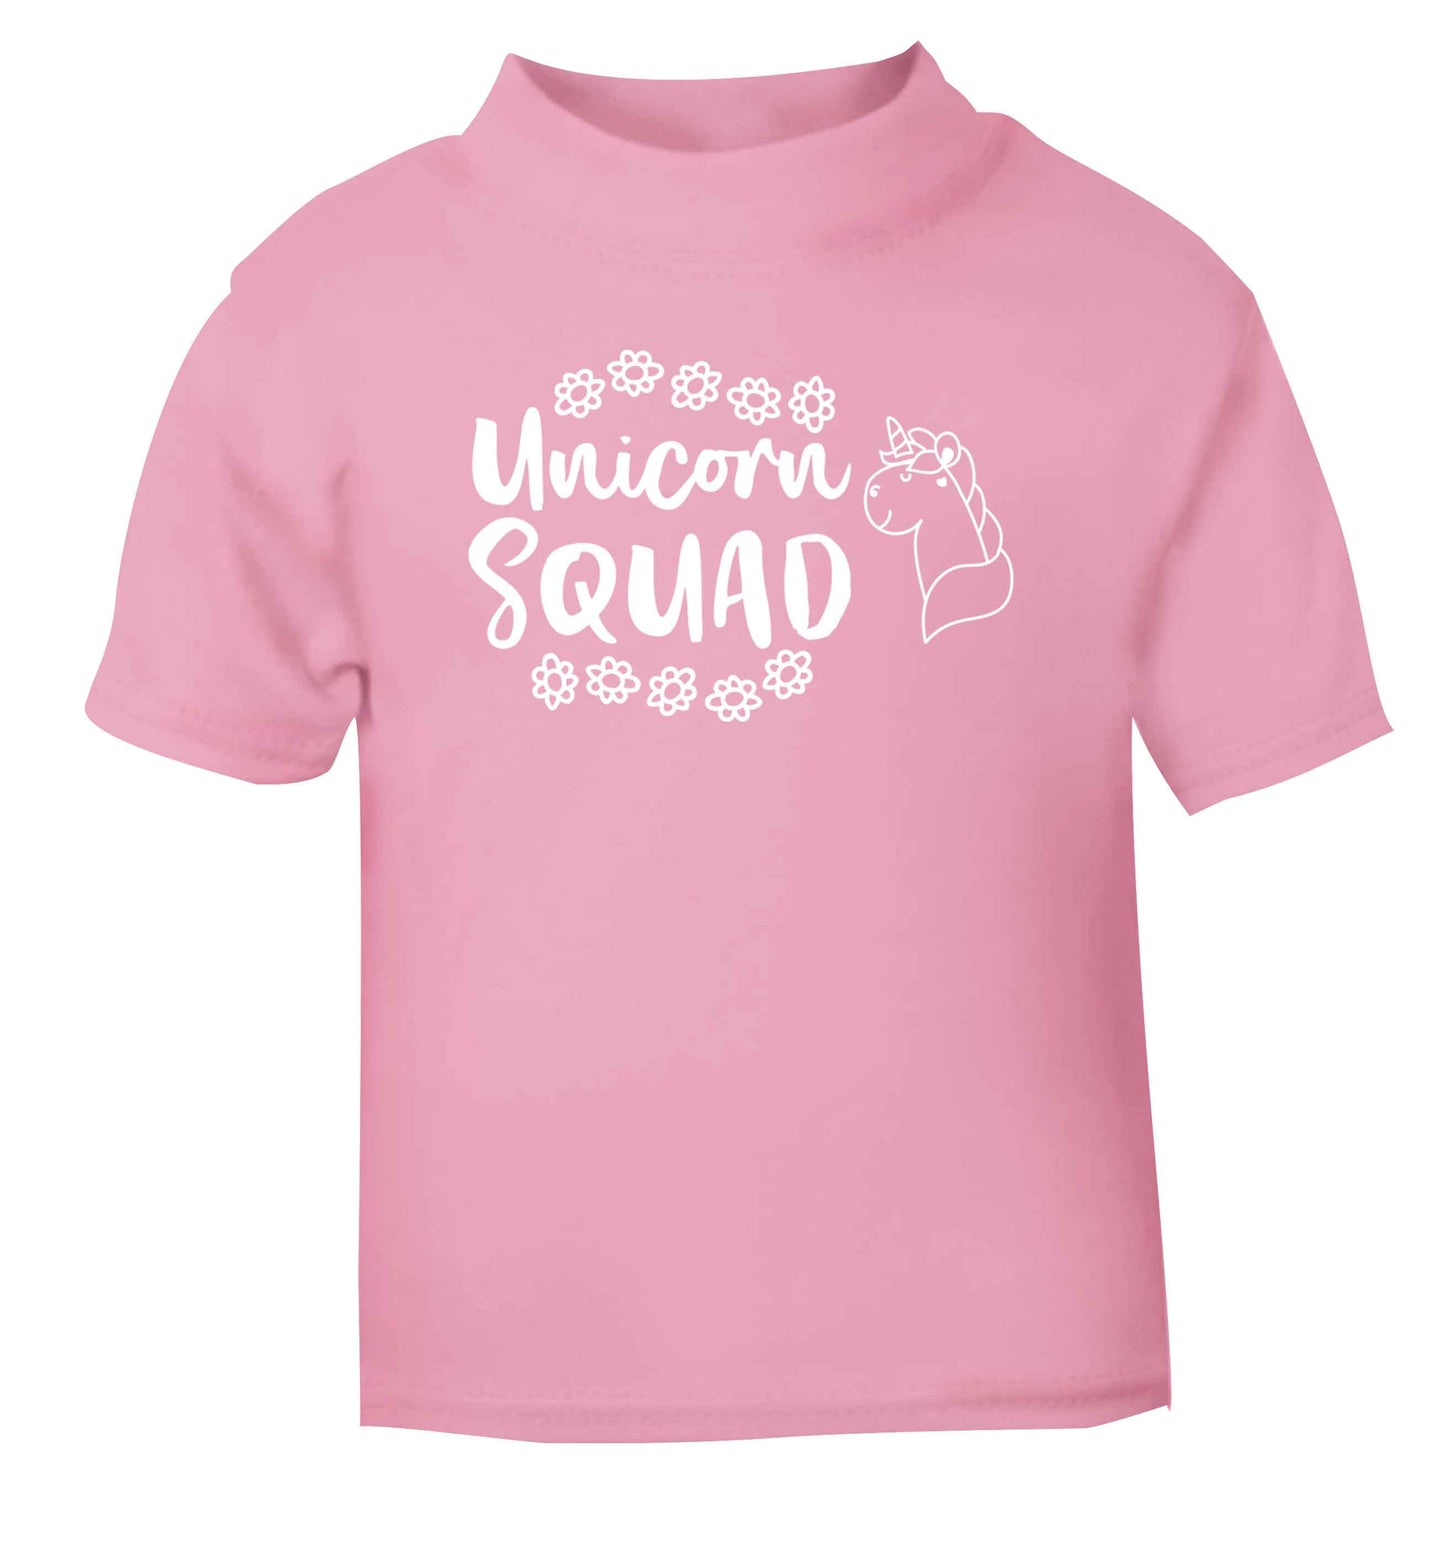 Unicorn Squad light pink Baby Toddler Tshirt 2 Years